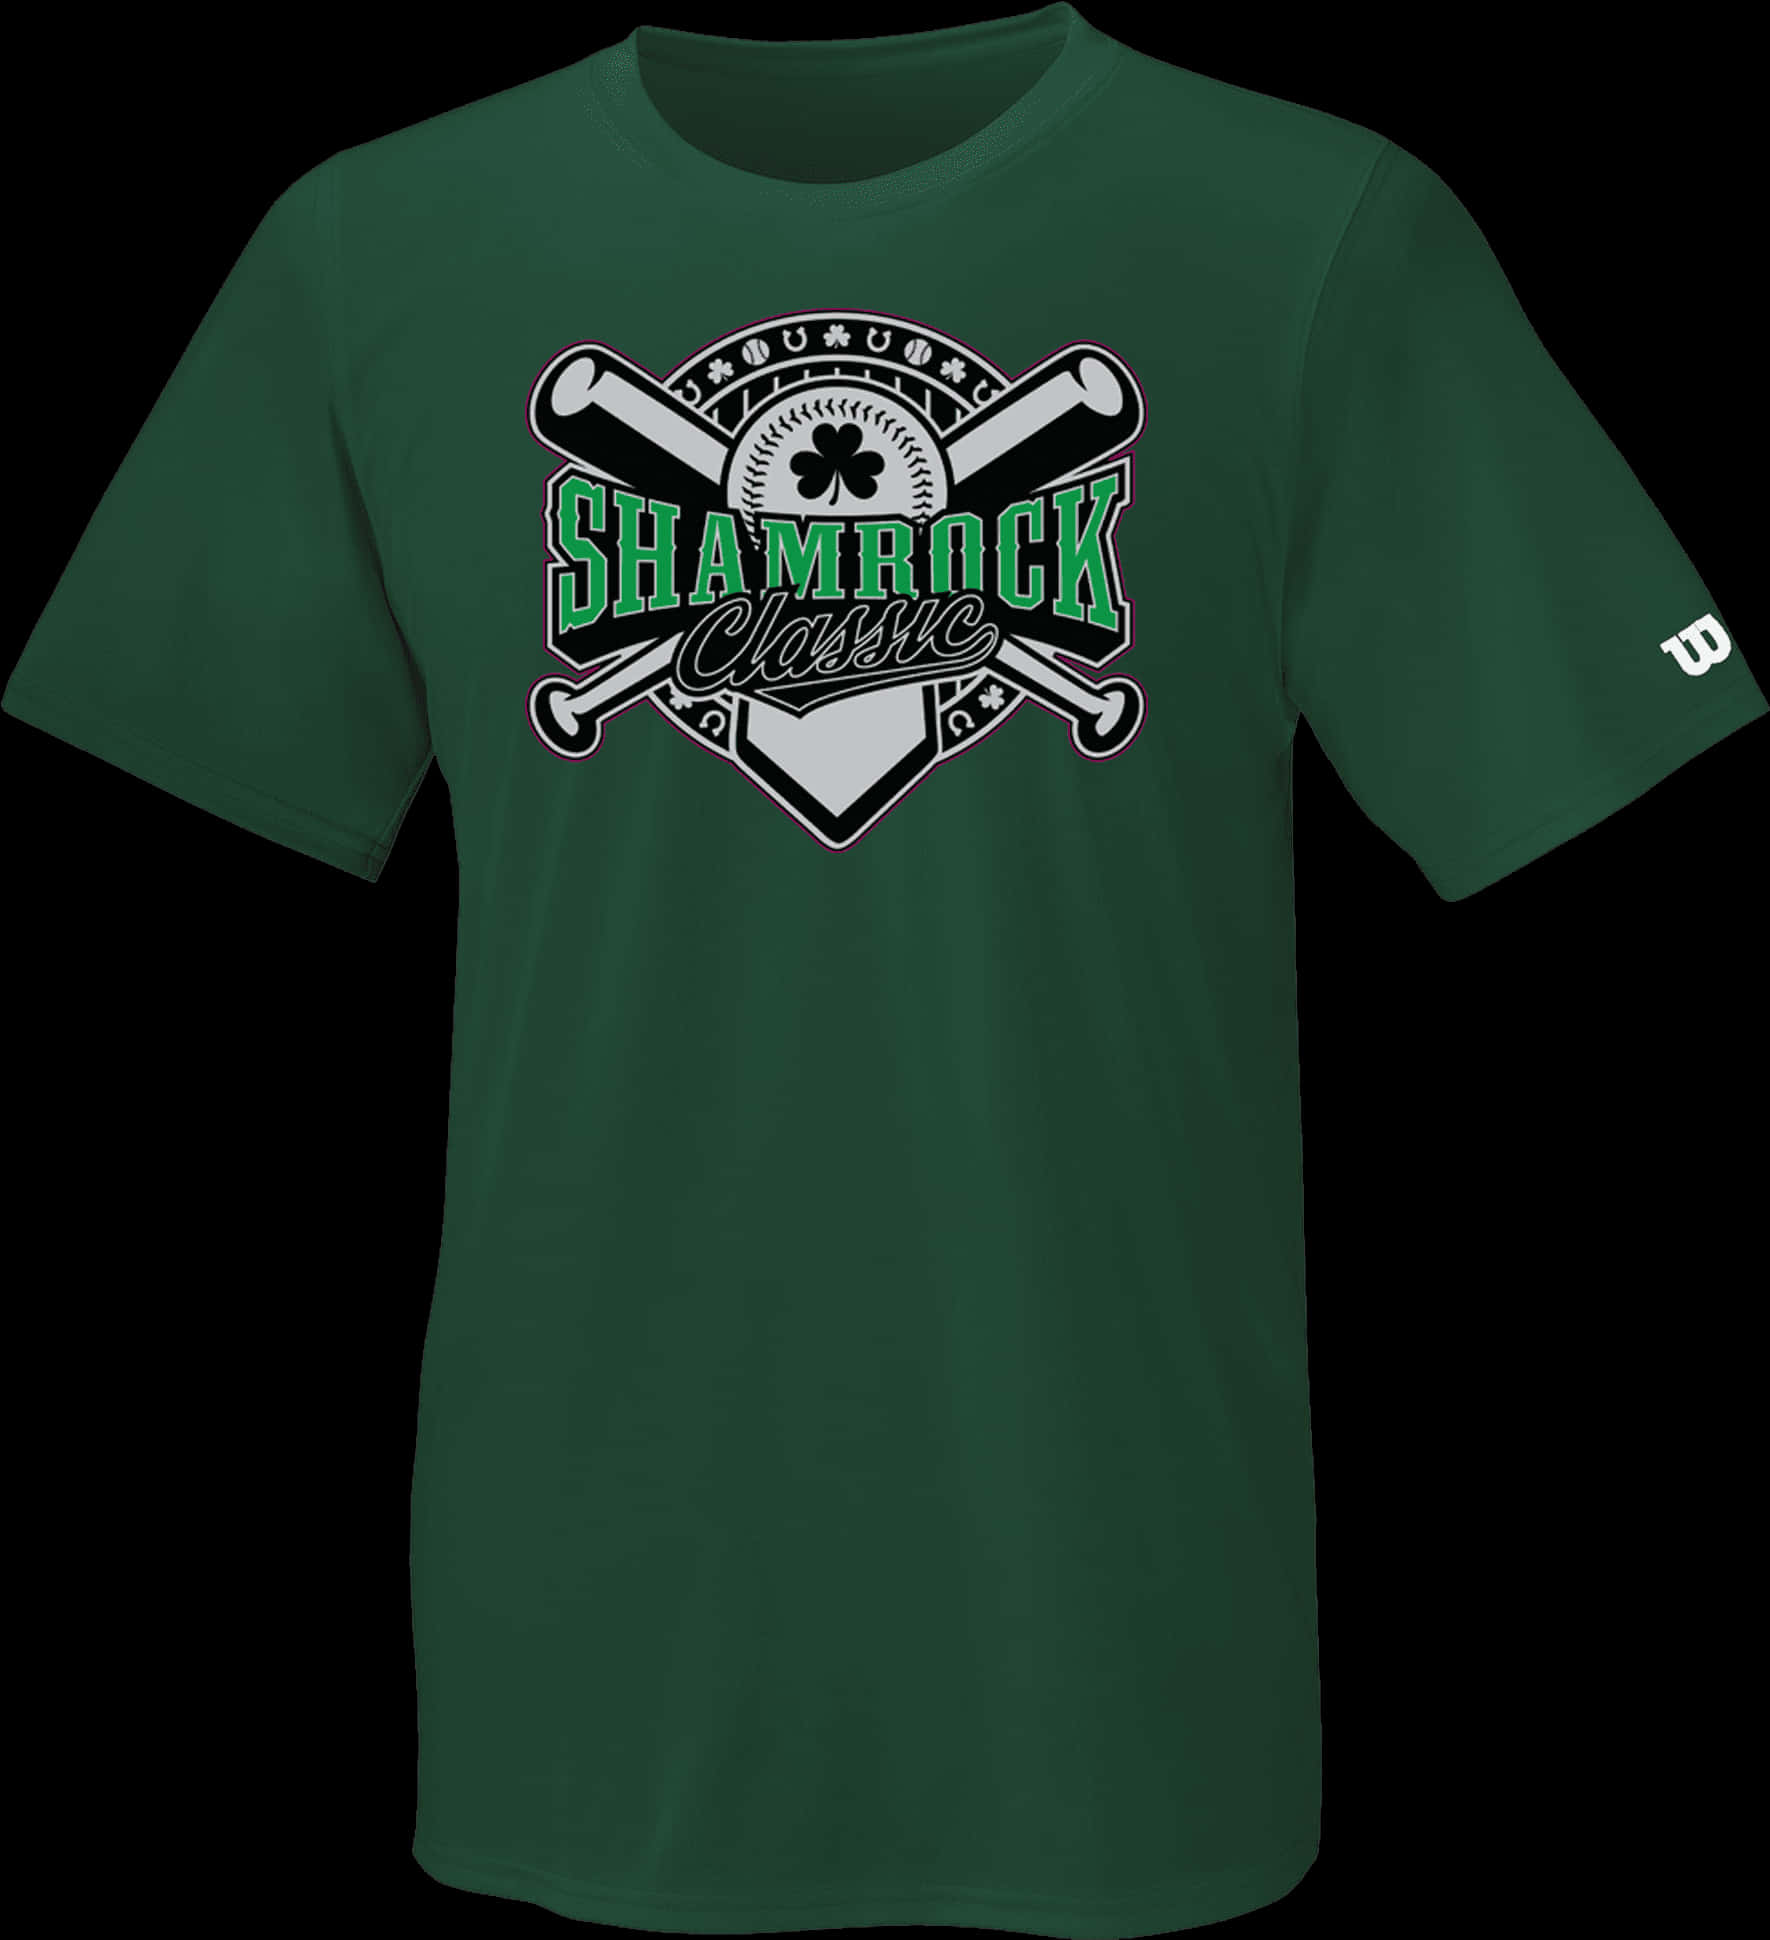 Shamrock Classic Green Tshirt Design PNG image